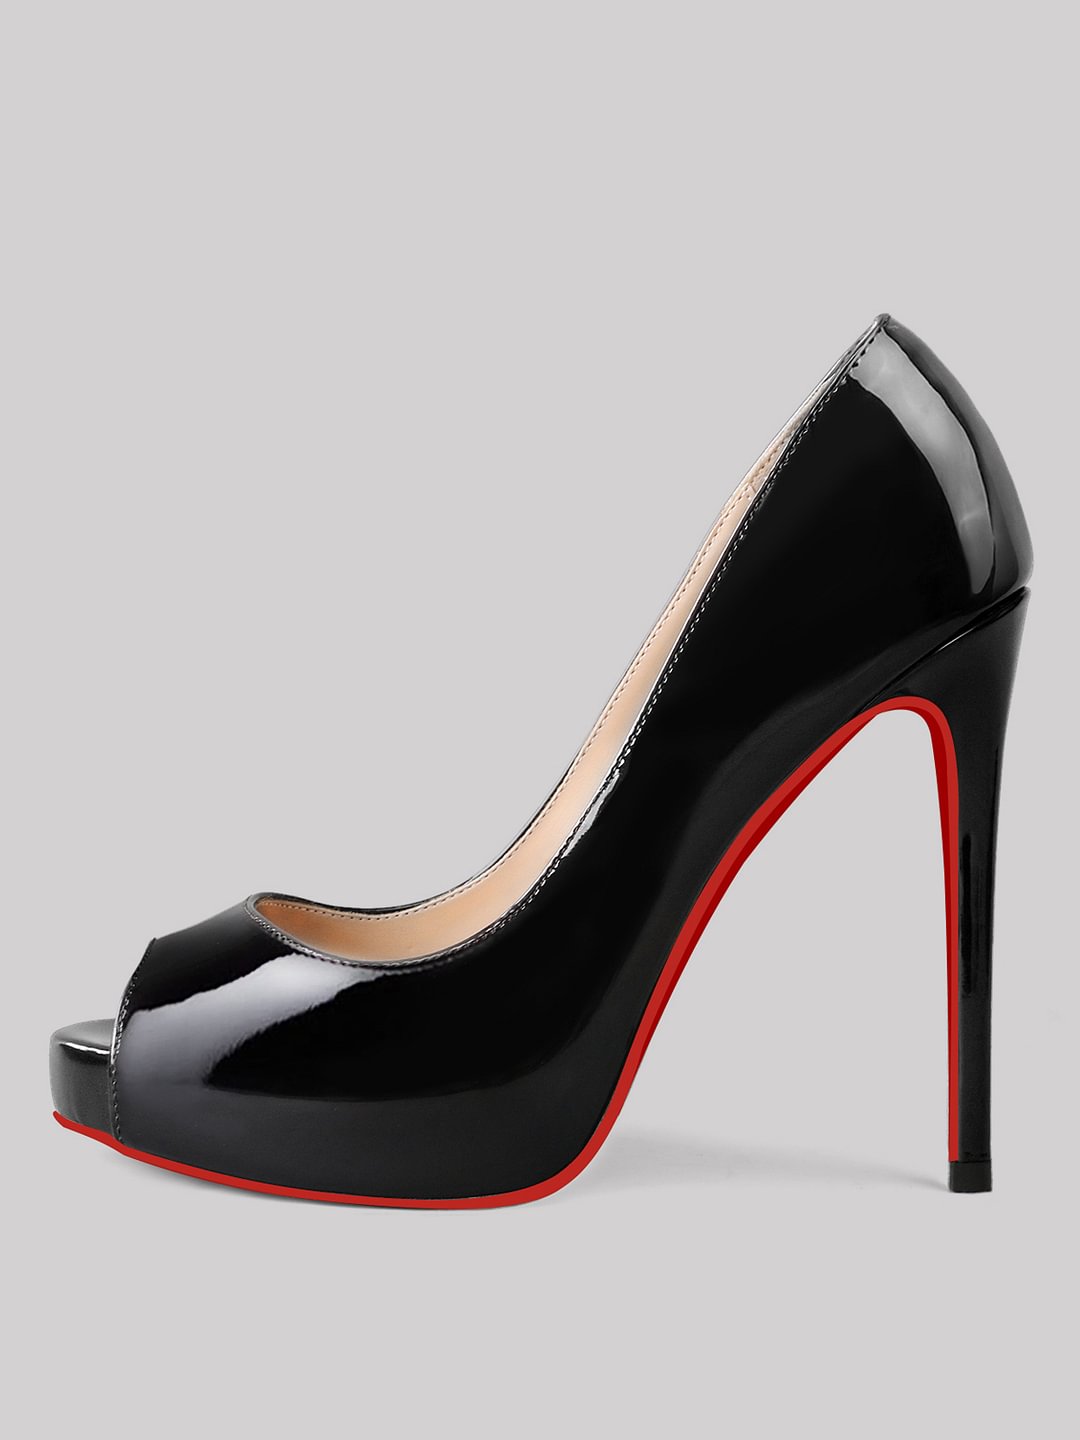 120mm Women's Peep Toe Platform Heels Red Bottom Party Wedding Pumps Patent Shoes